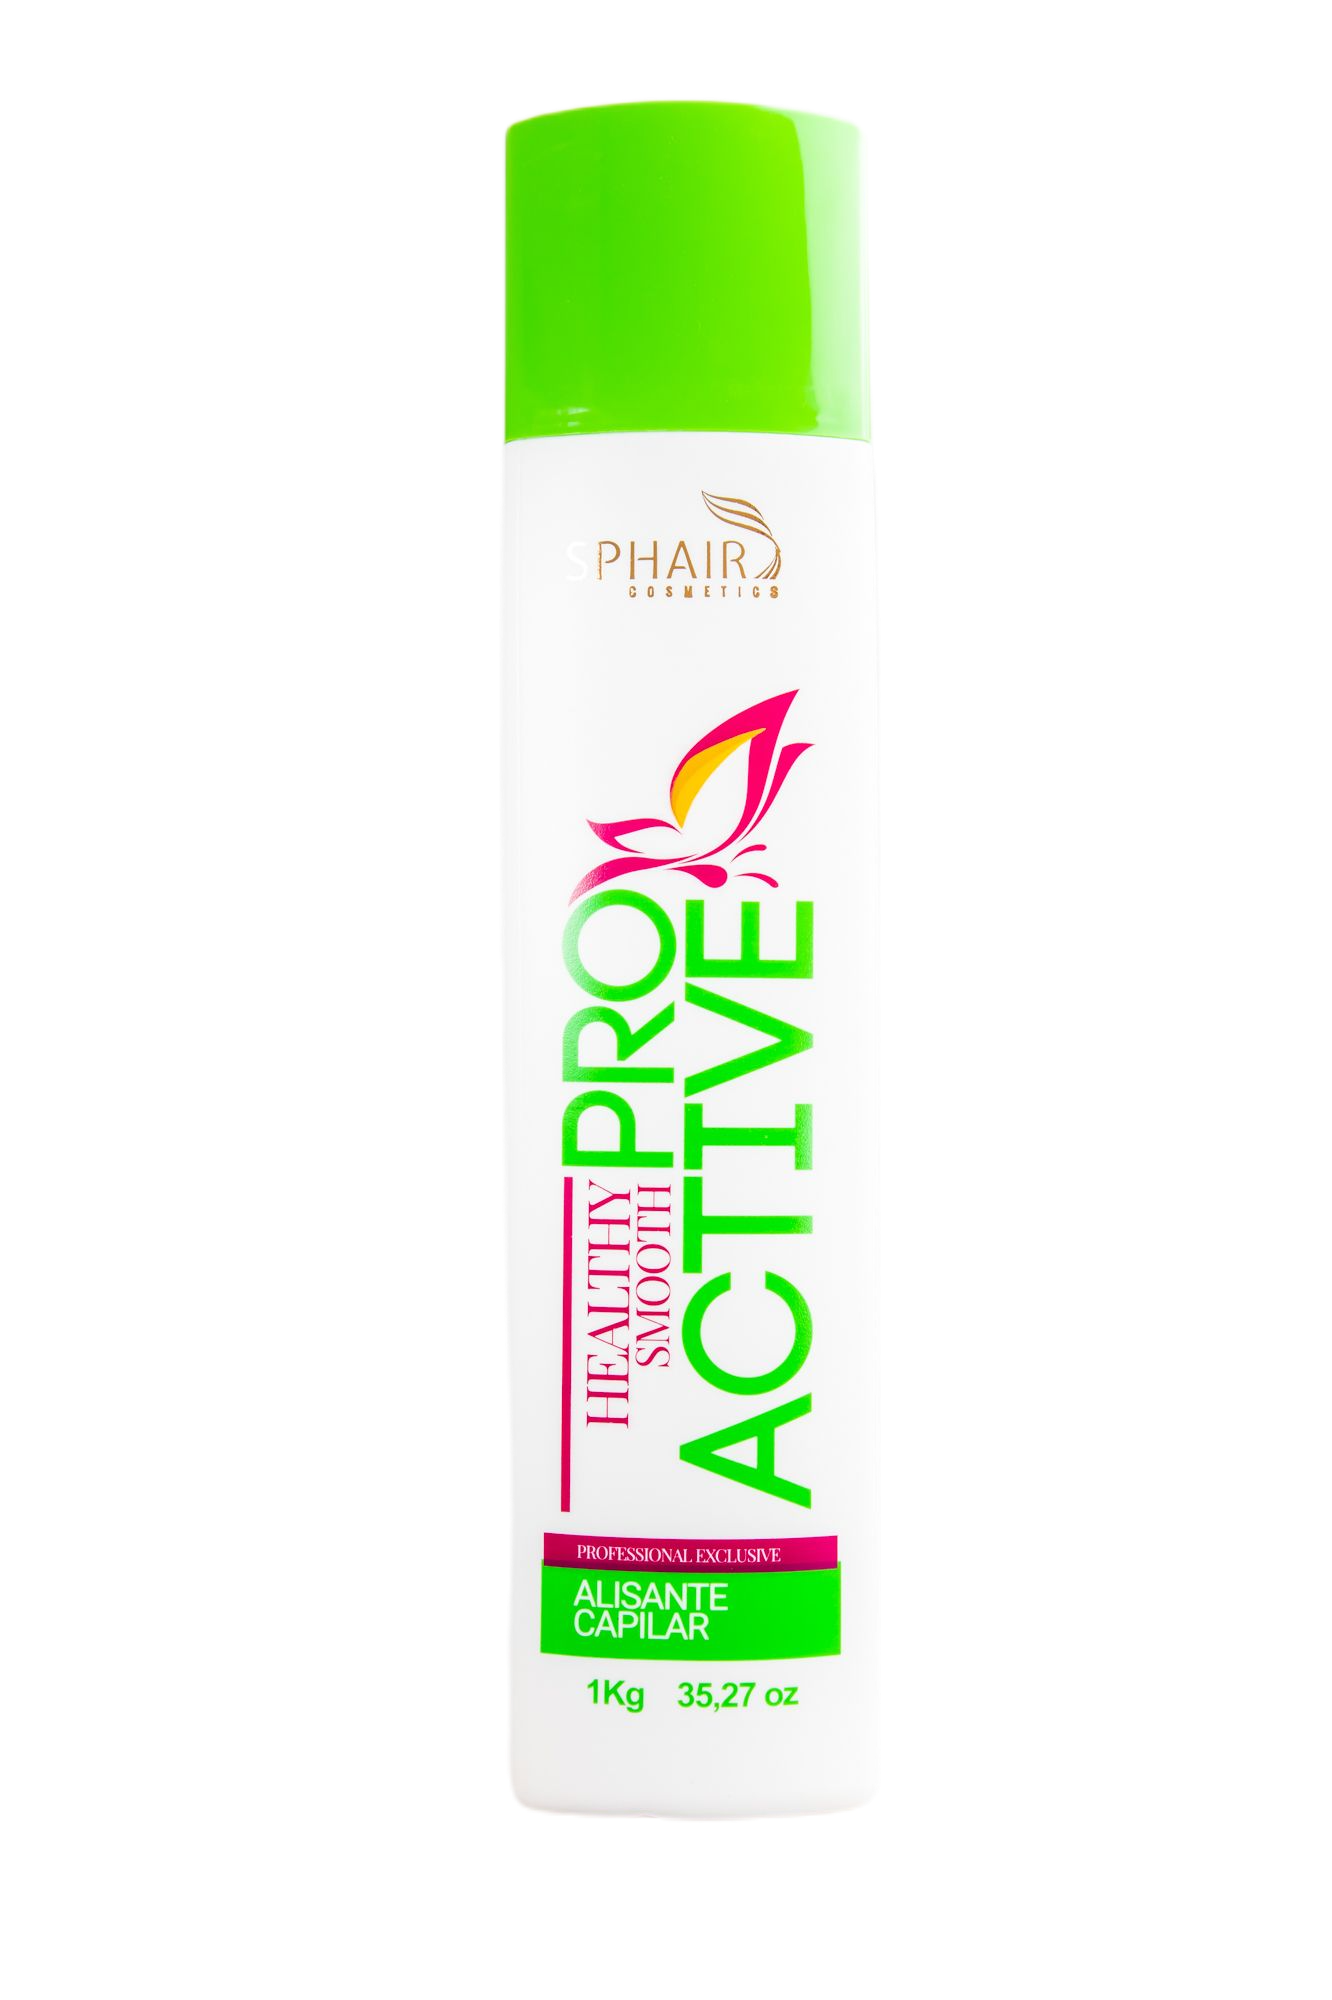 Sphair Brazilian Keratin Treatment Brazilian Brush Healthy Smooth Organic Hair Progressive ProActive 1kg - Sphair